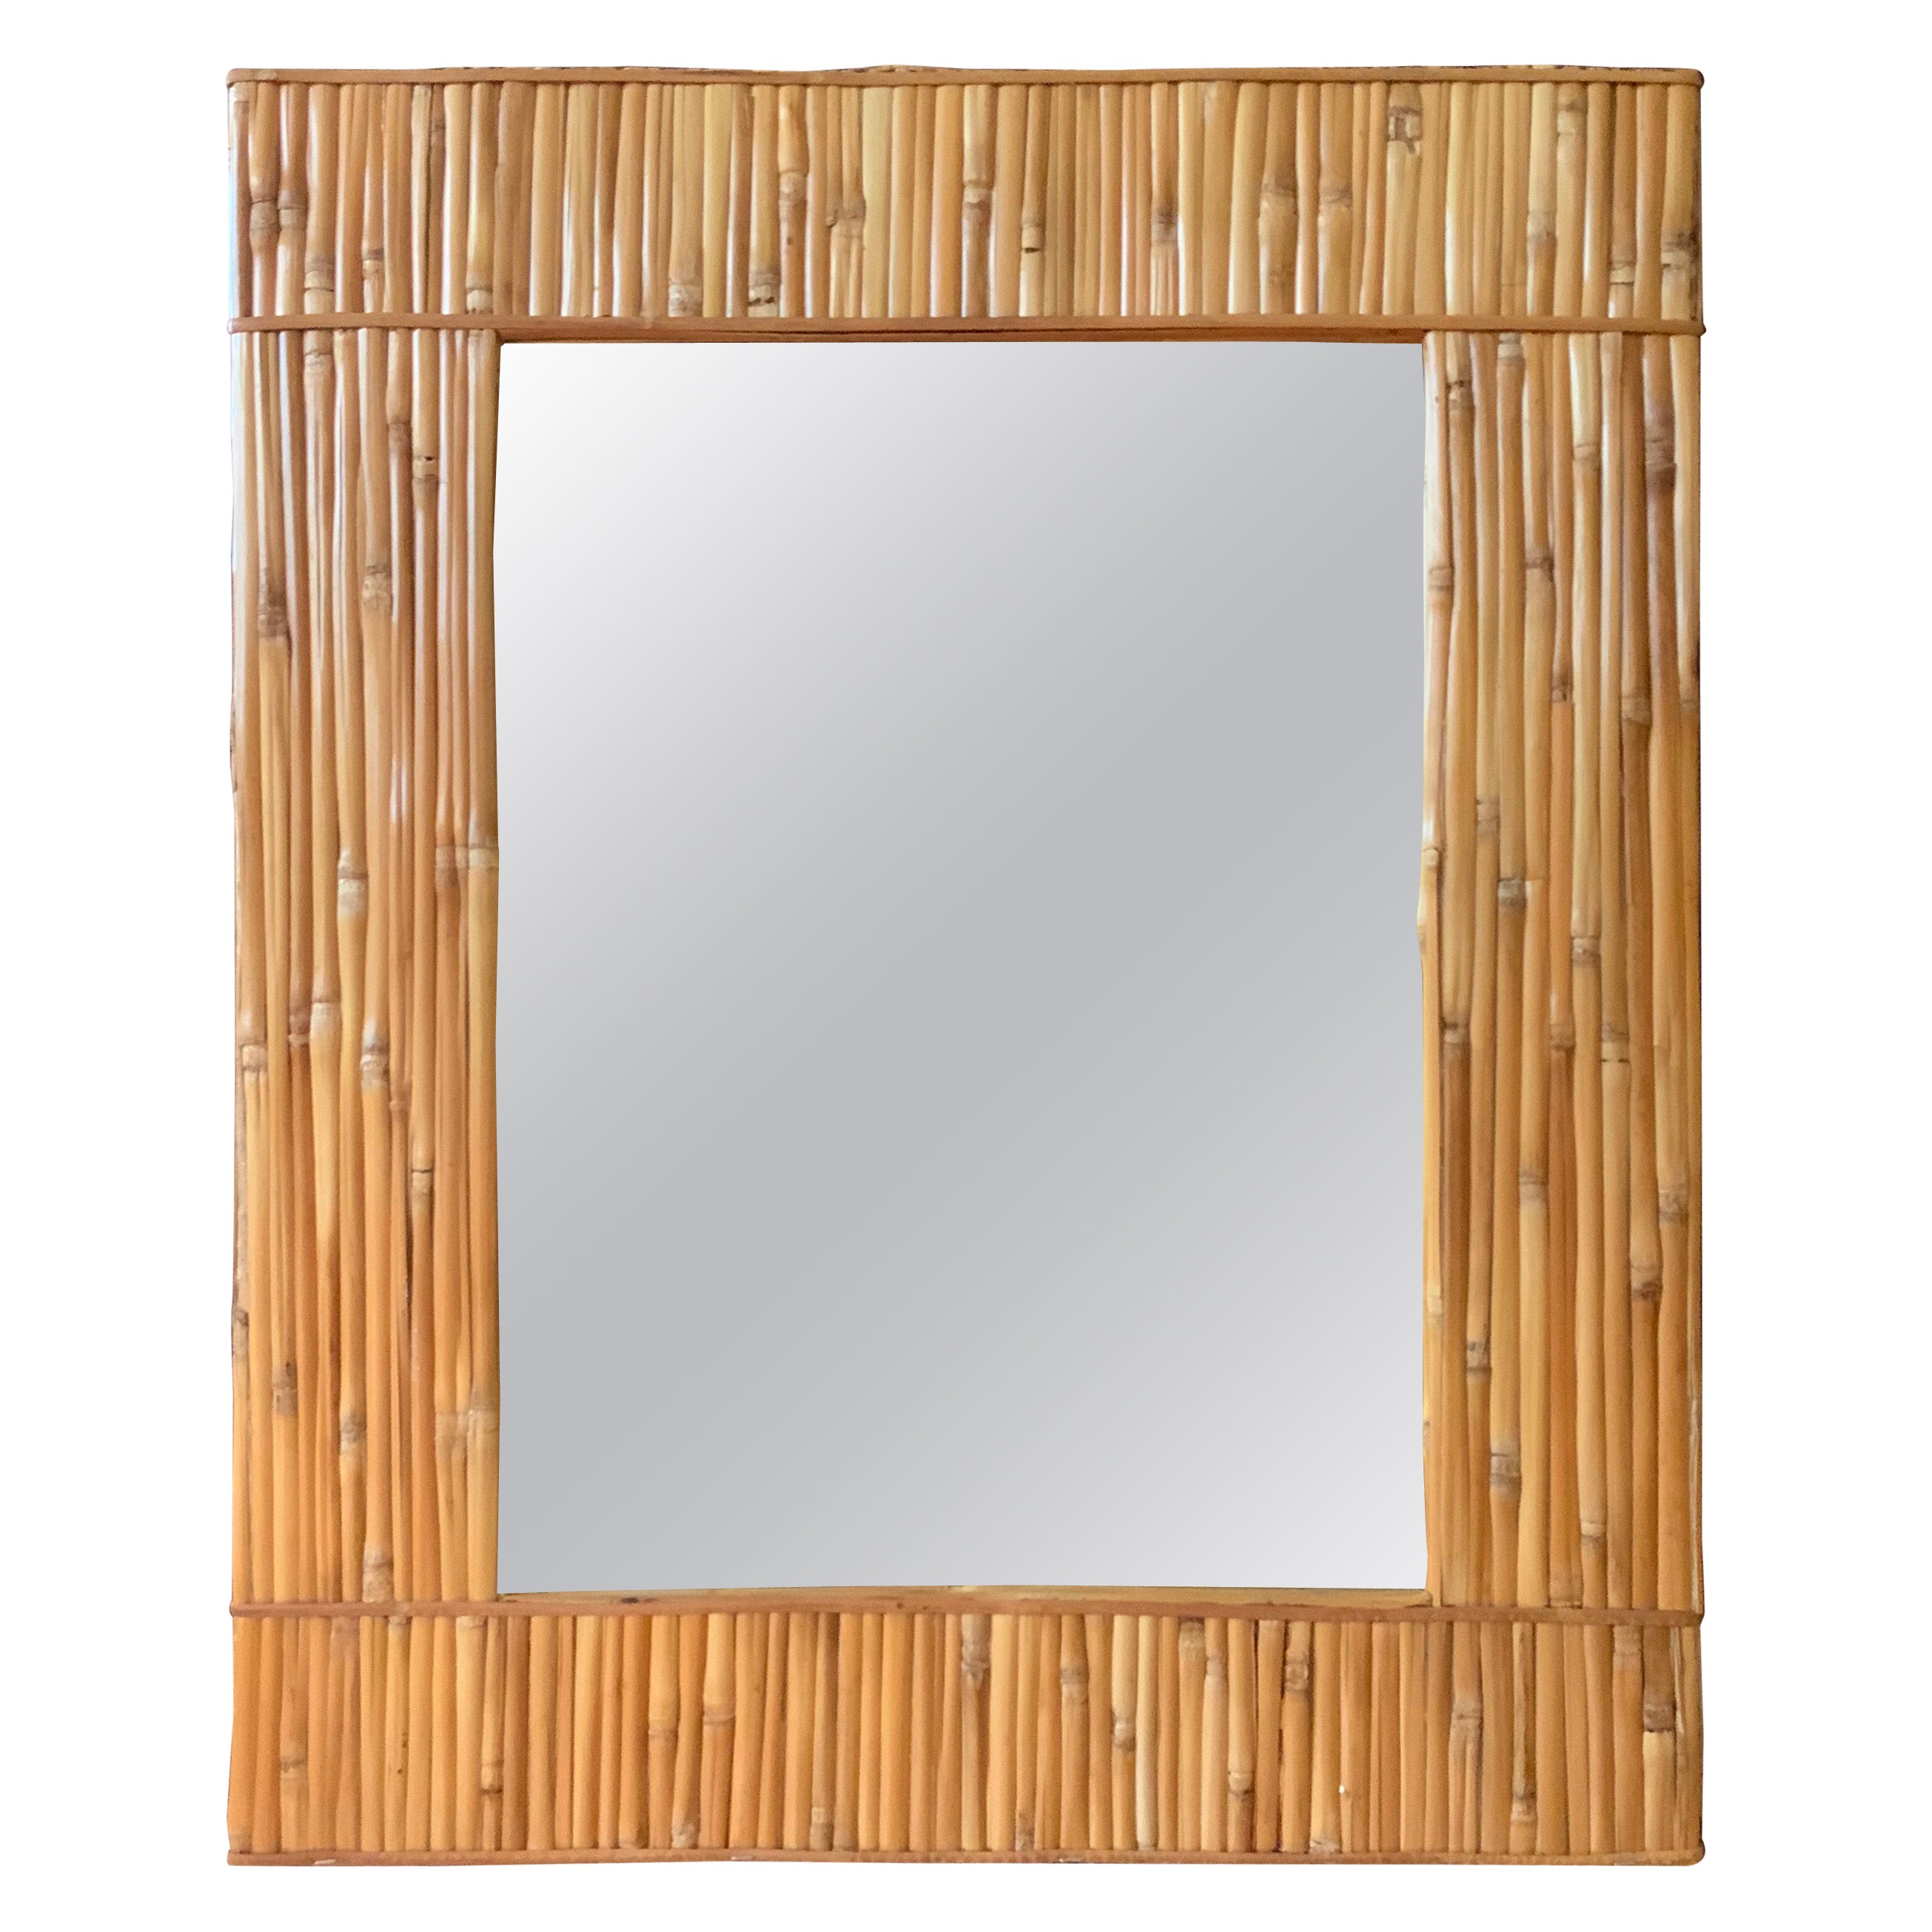 1960's Bamboo Mirror by Raymor